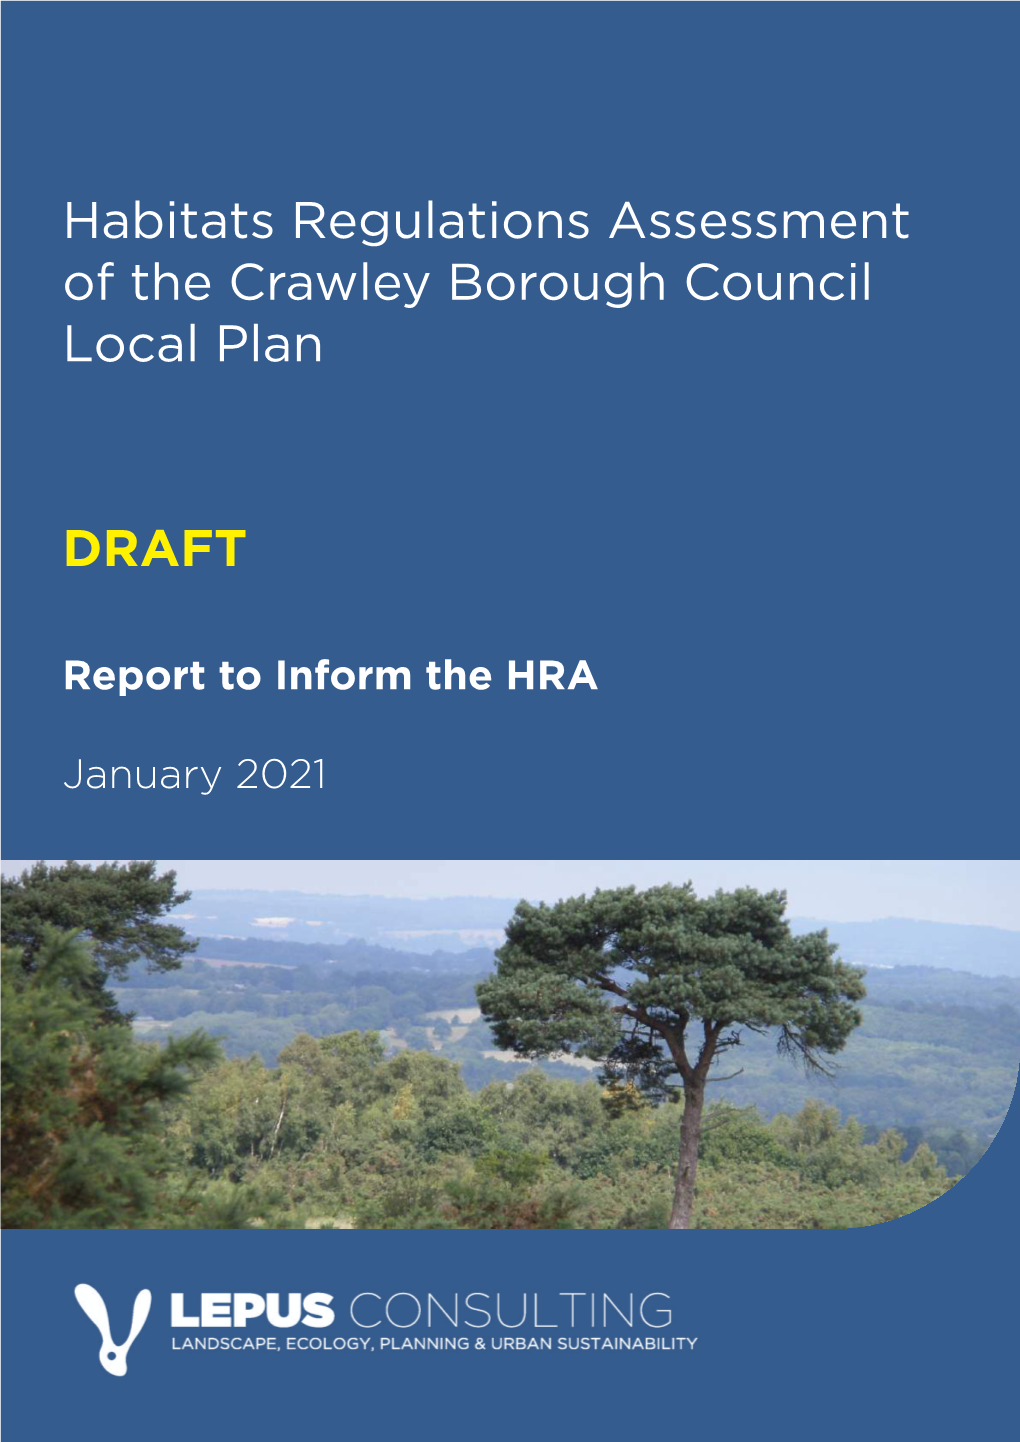 Draft Habitats Regulations Assessment of Crawley Local Plan